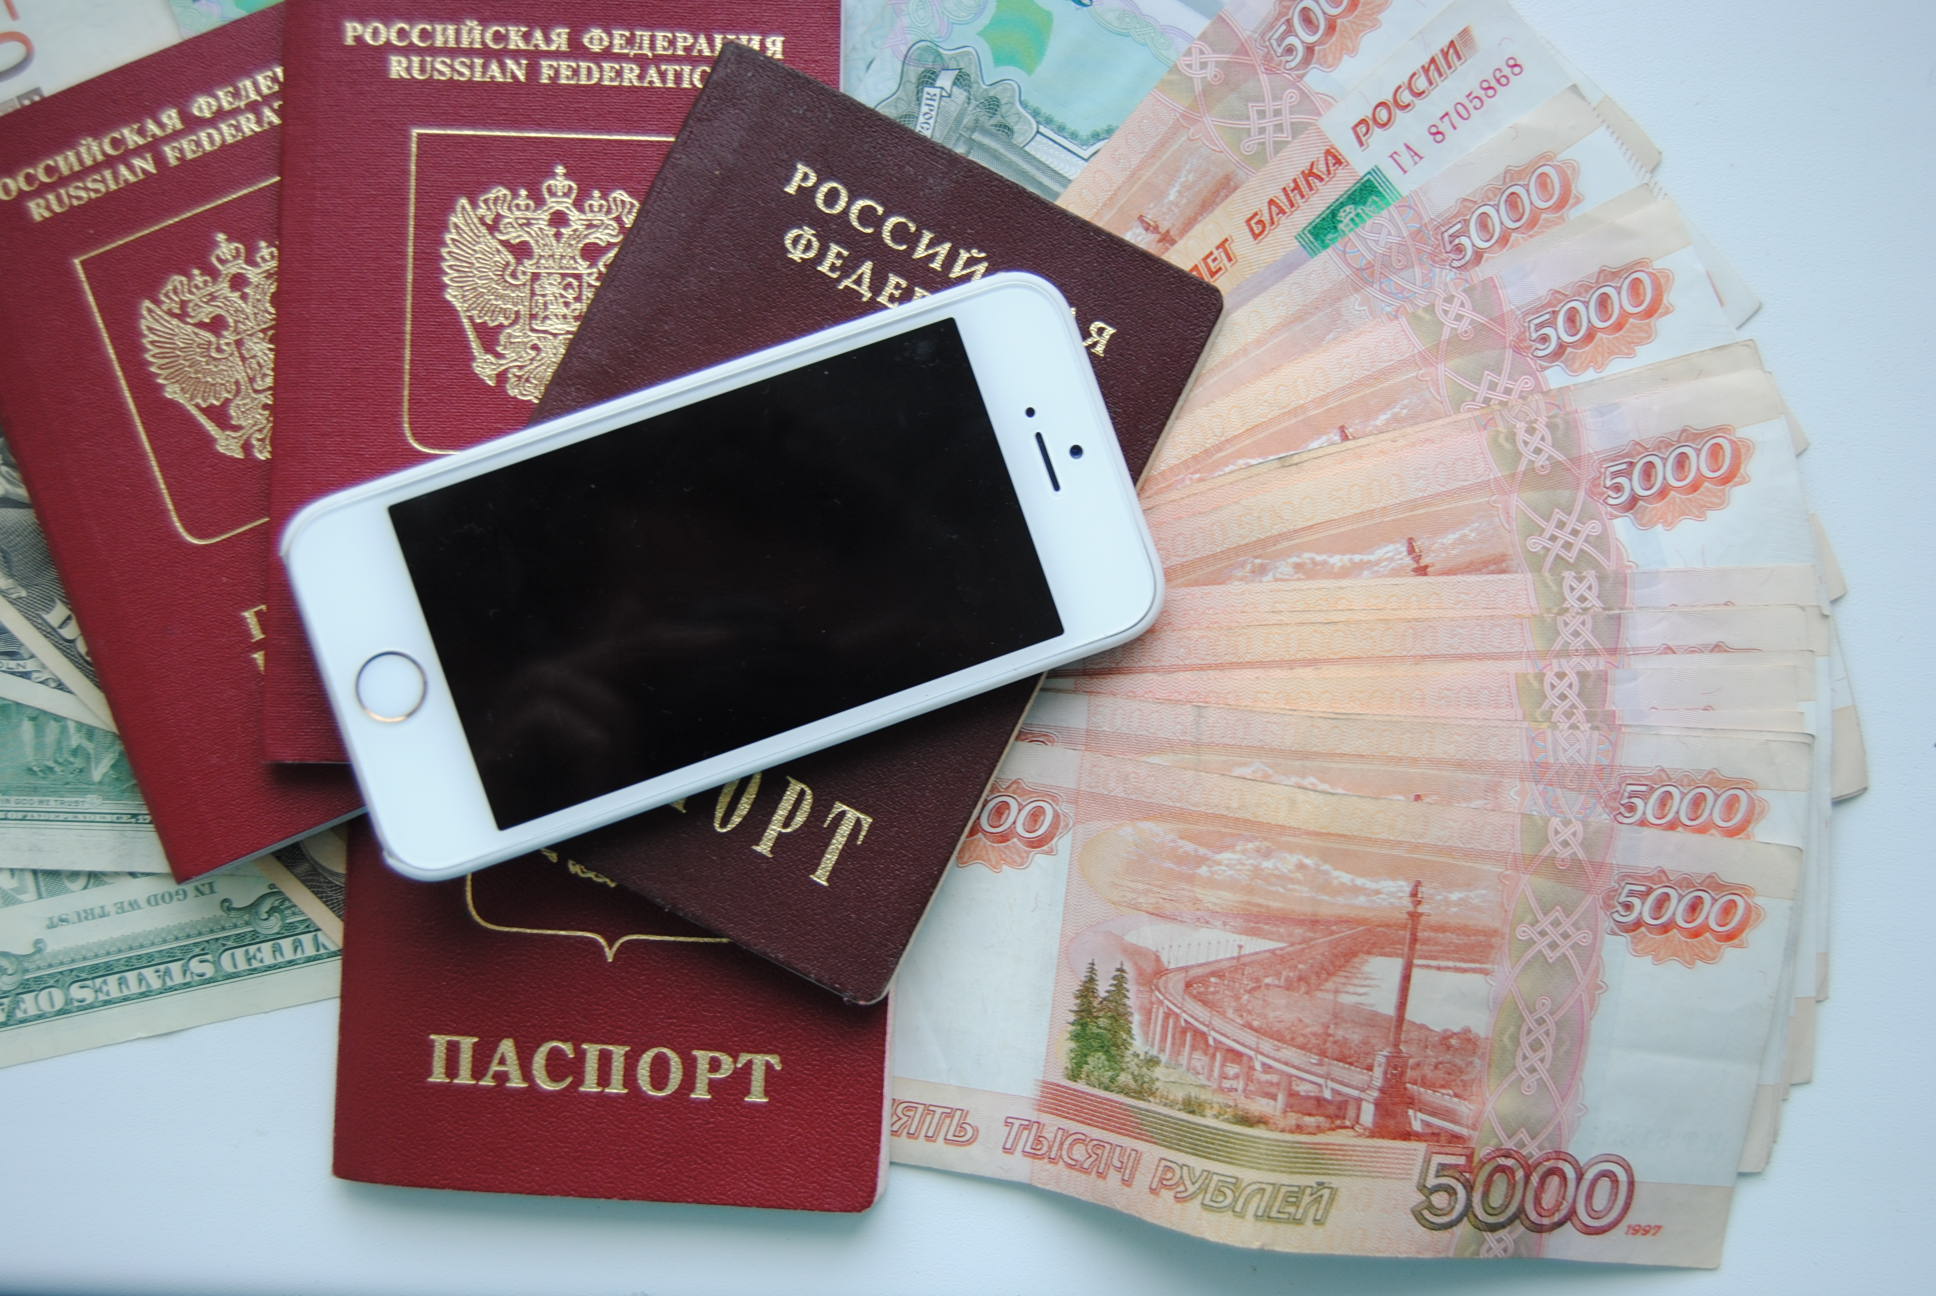 Читинец оформил кредит на телефон по паспорту знакомого